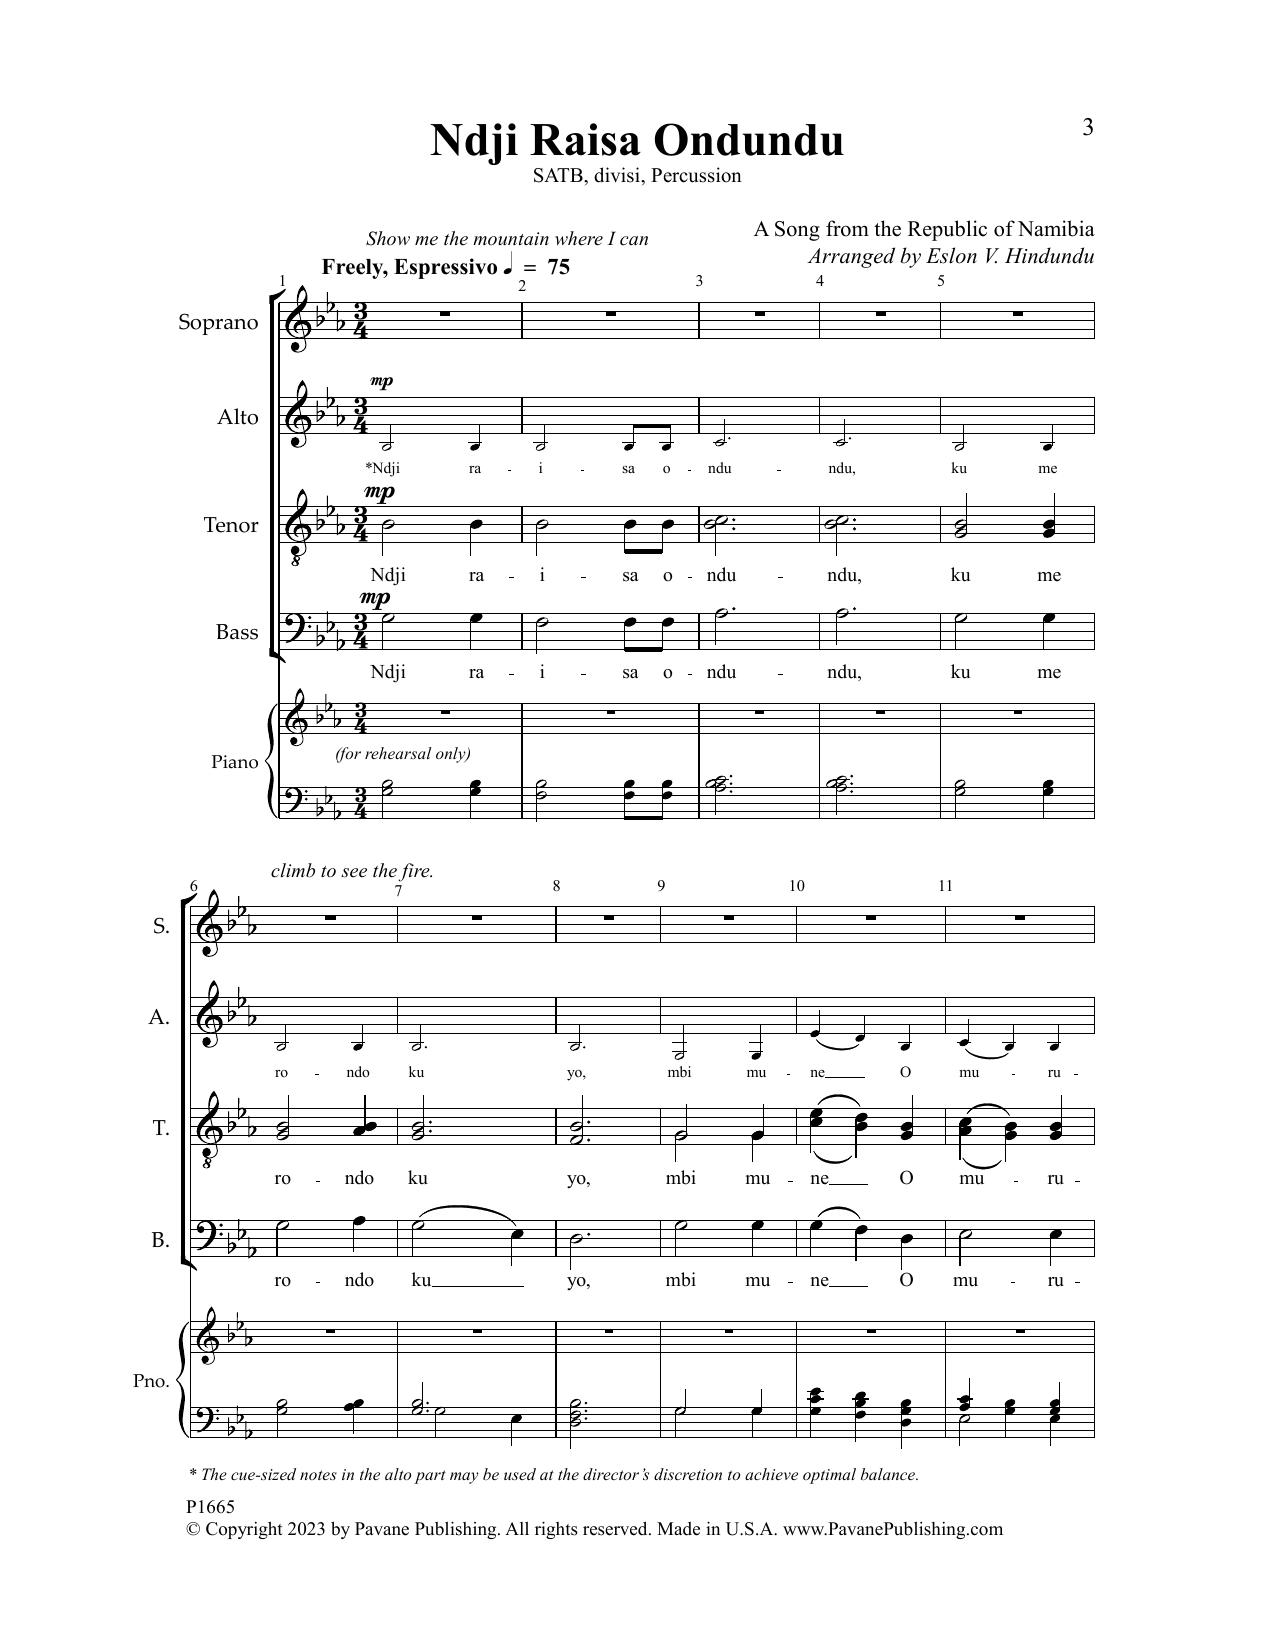 Eslon V. Hindundu Ndji Raisa Ondundu sheet music notes and chords arranged for SATB Choir